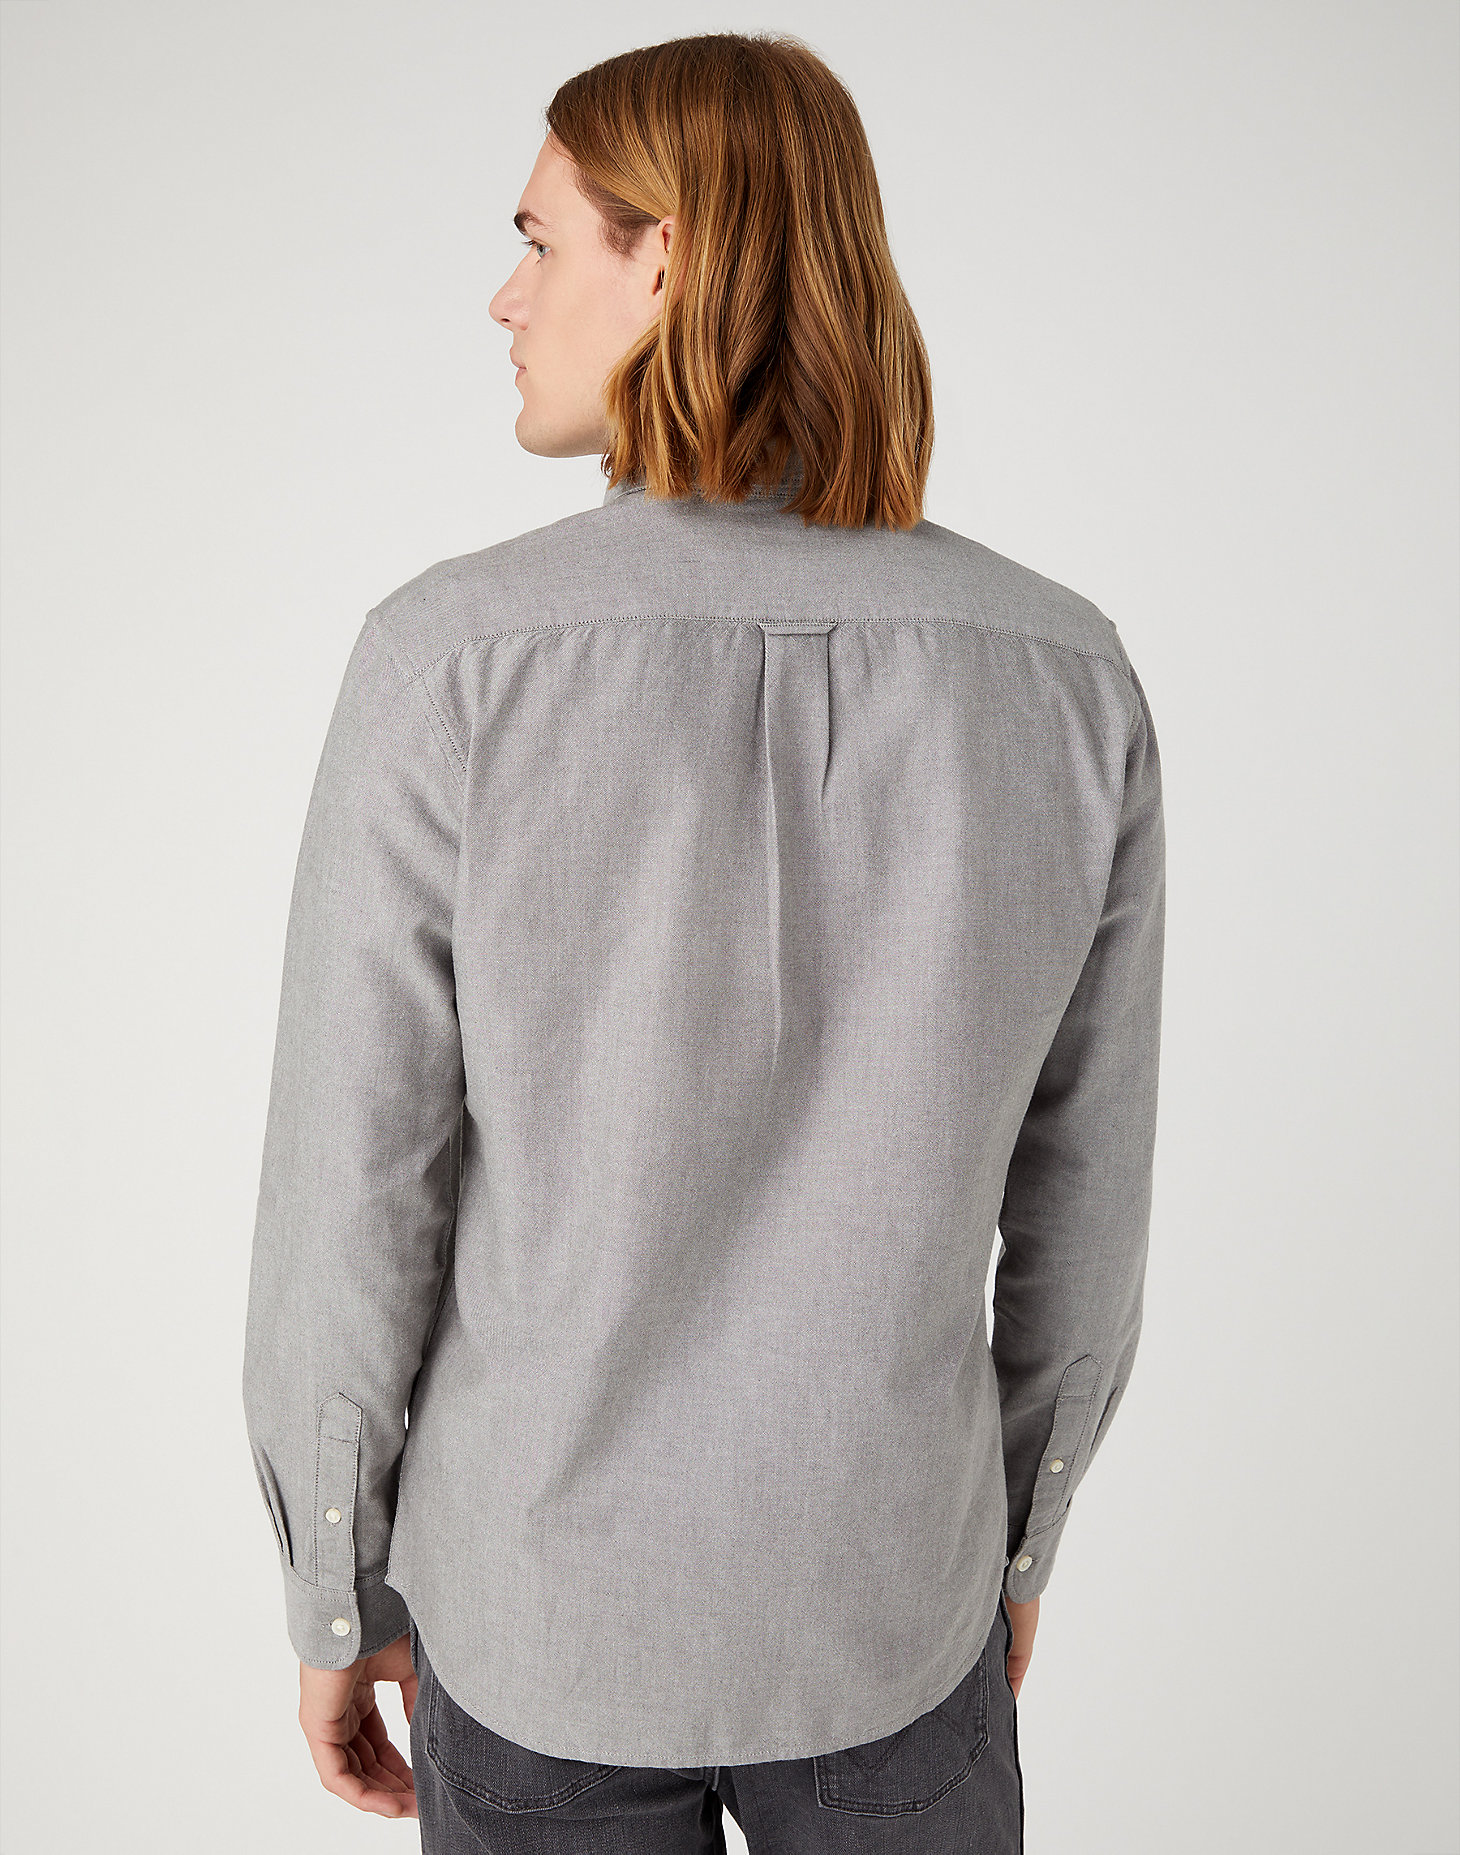 1 Pocket Button Down Shirt in Grey alternative view 2